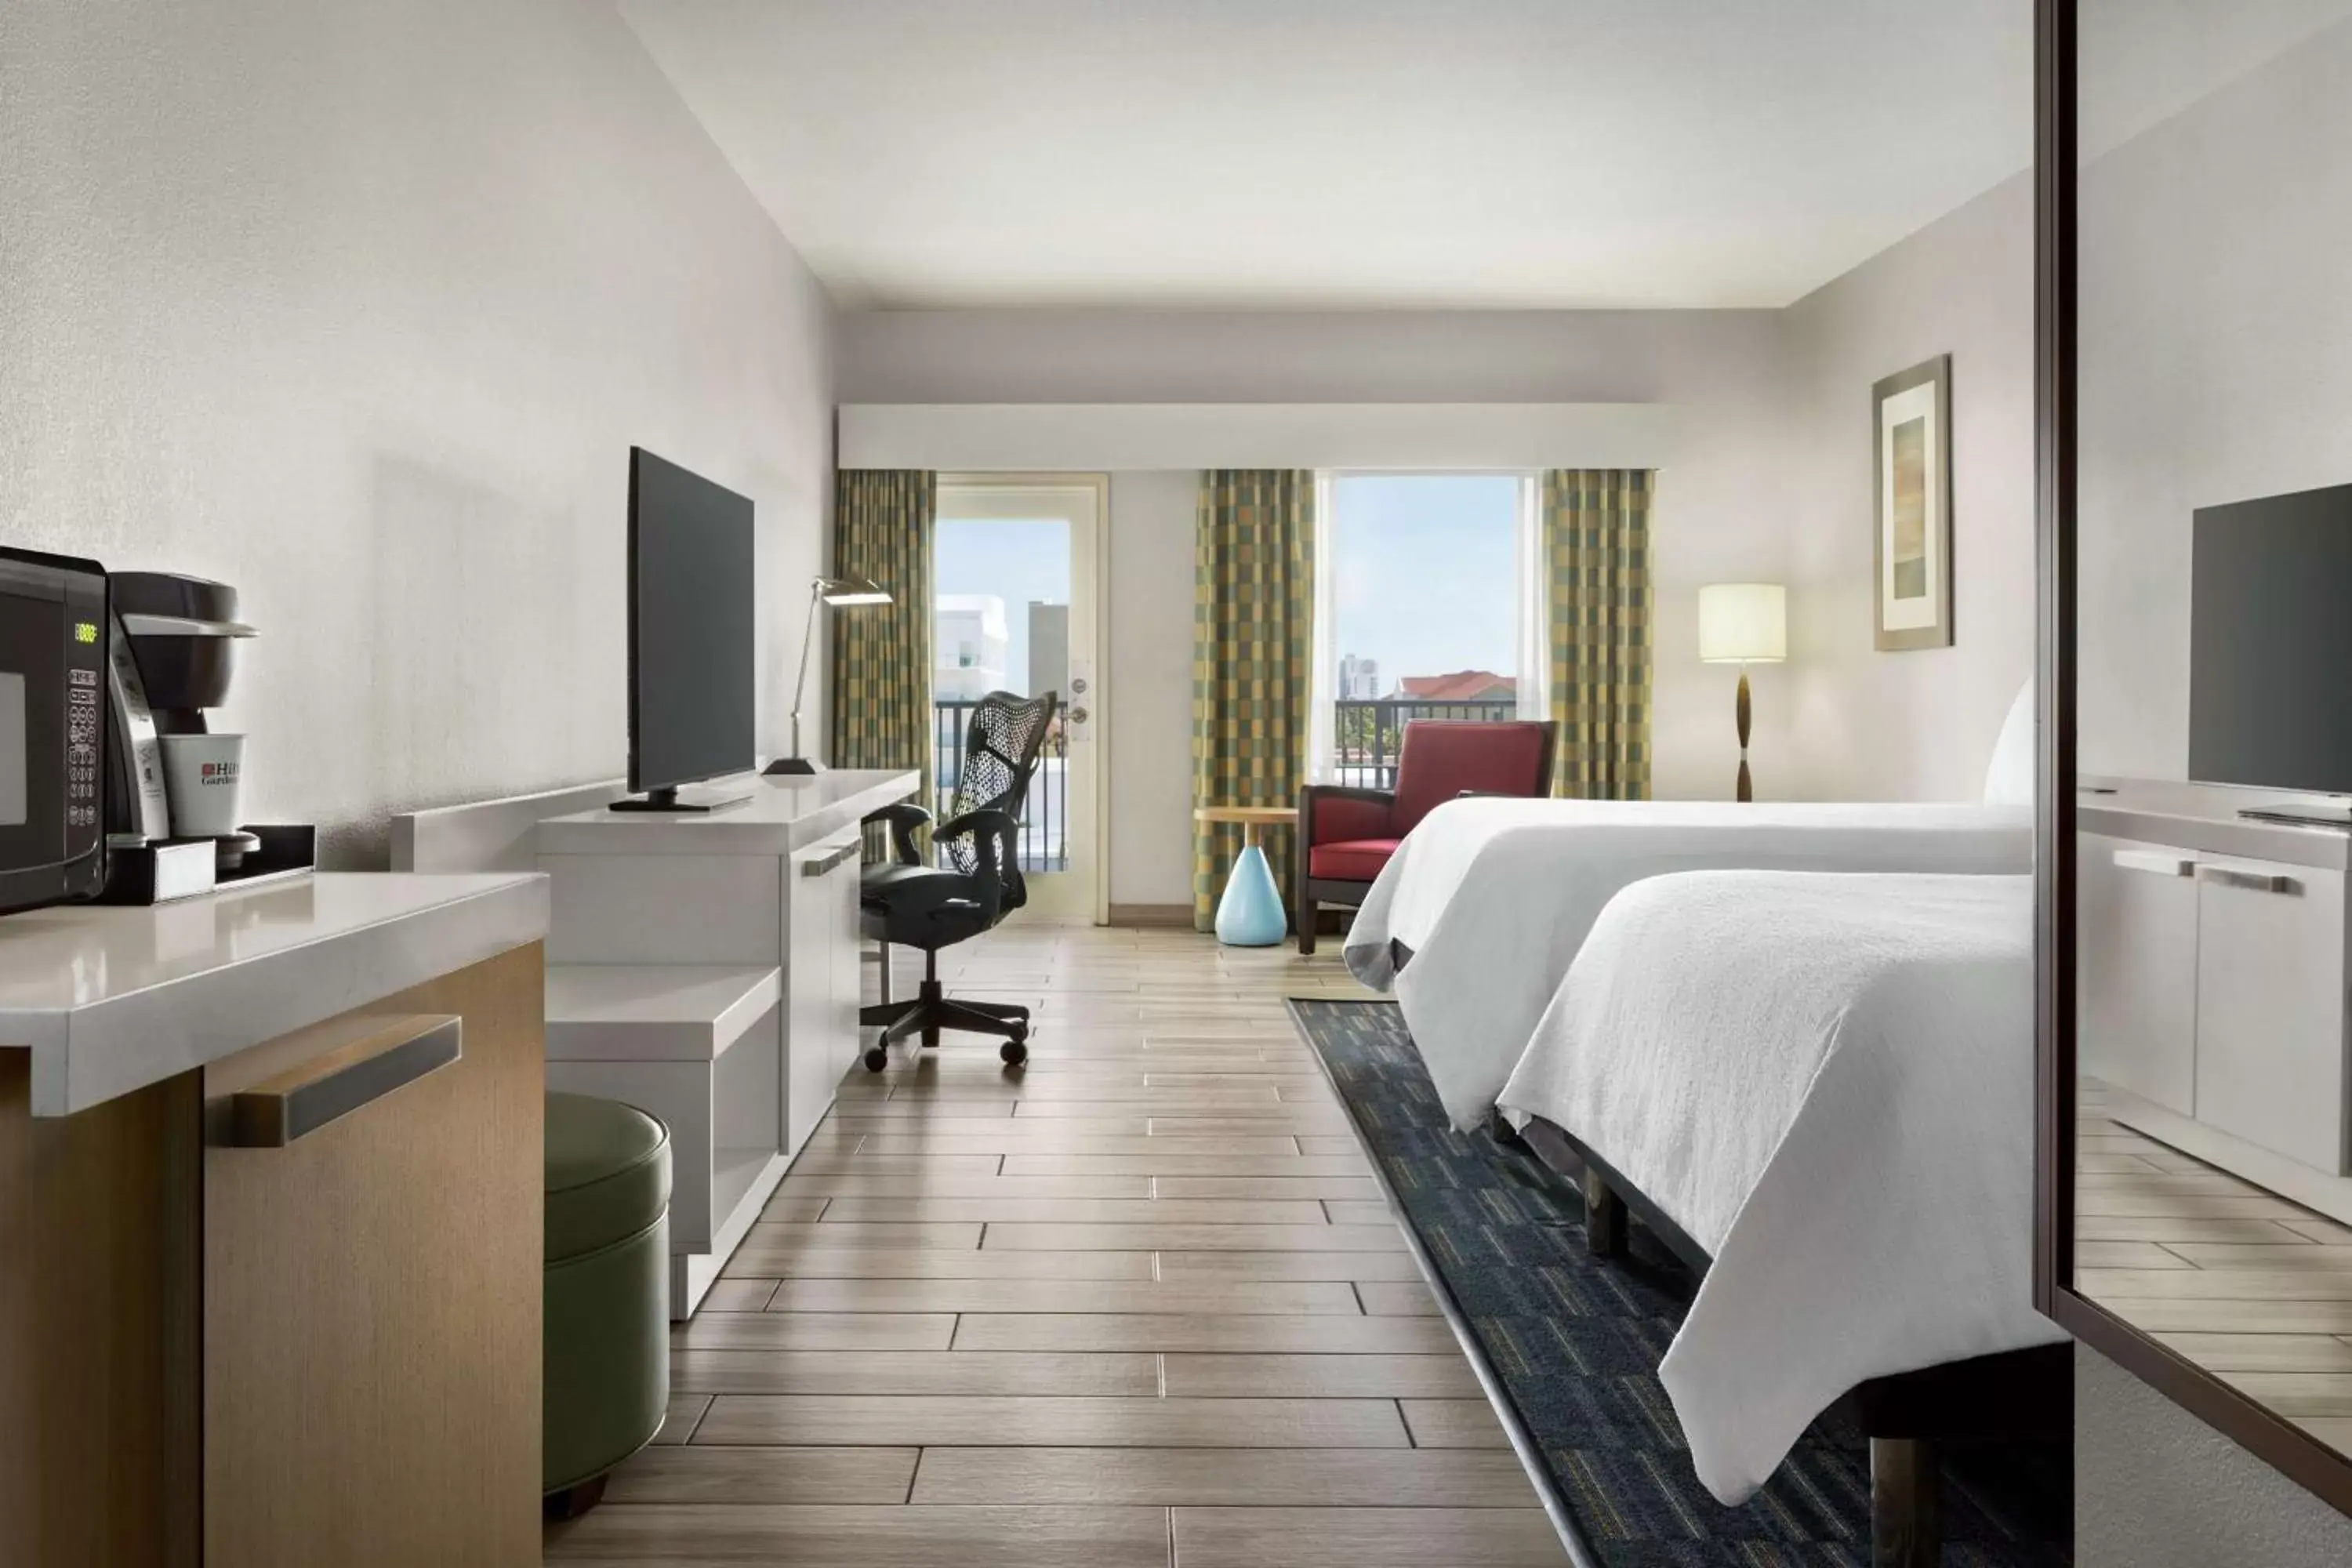 Bedroom in Hilton Garden Inn South Padre Island